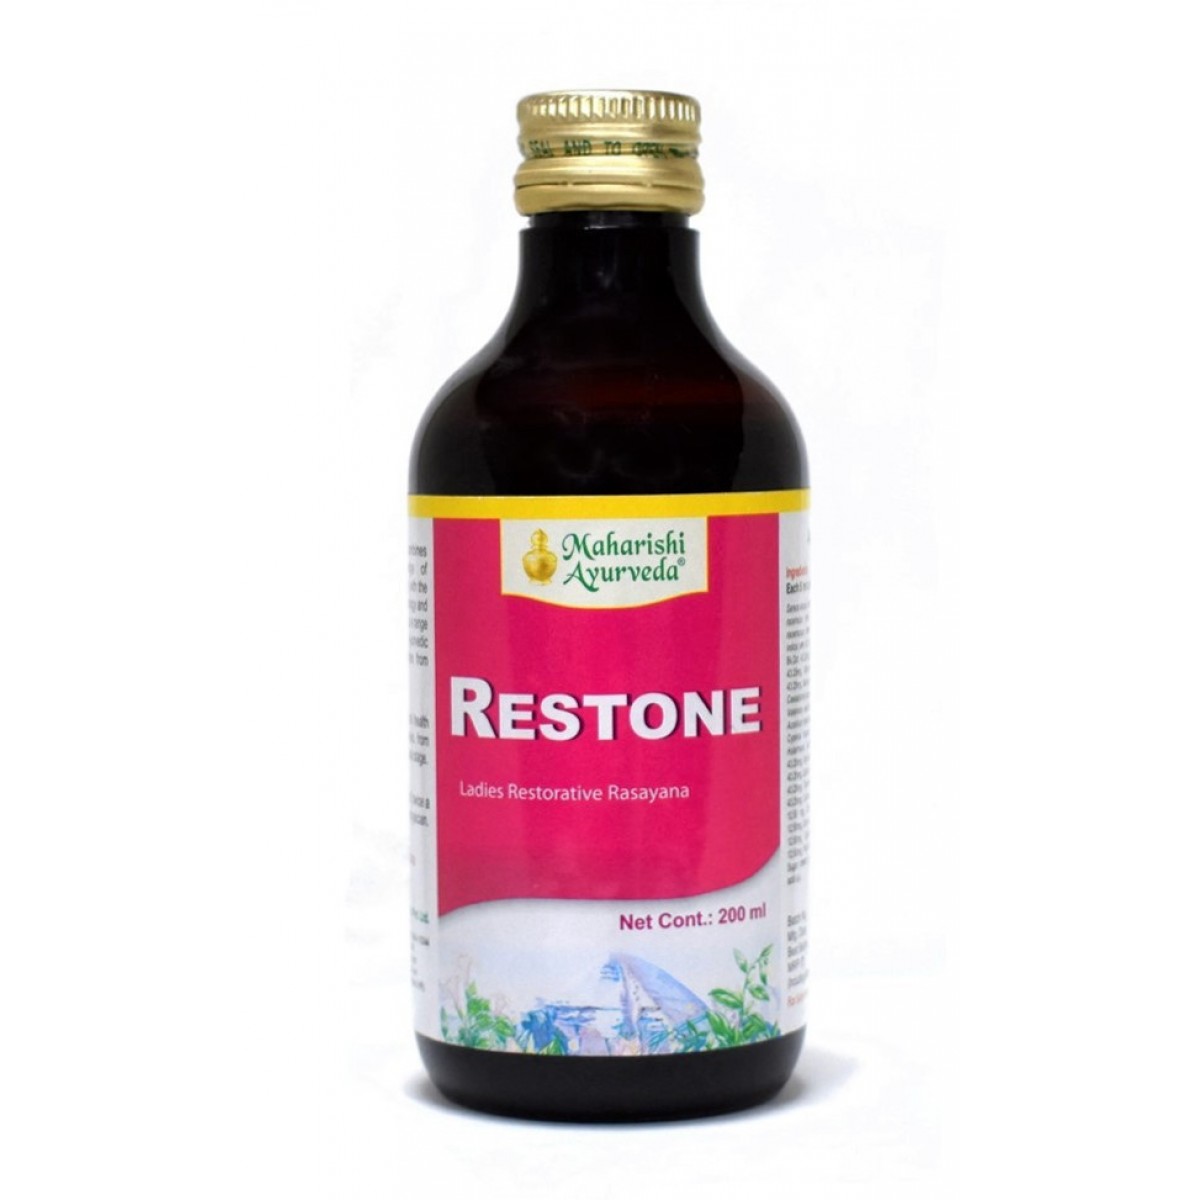 Buy Maharishi Restone Syrup at Best Price Online